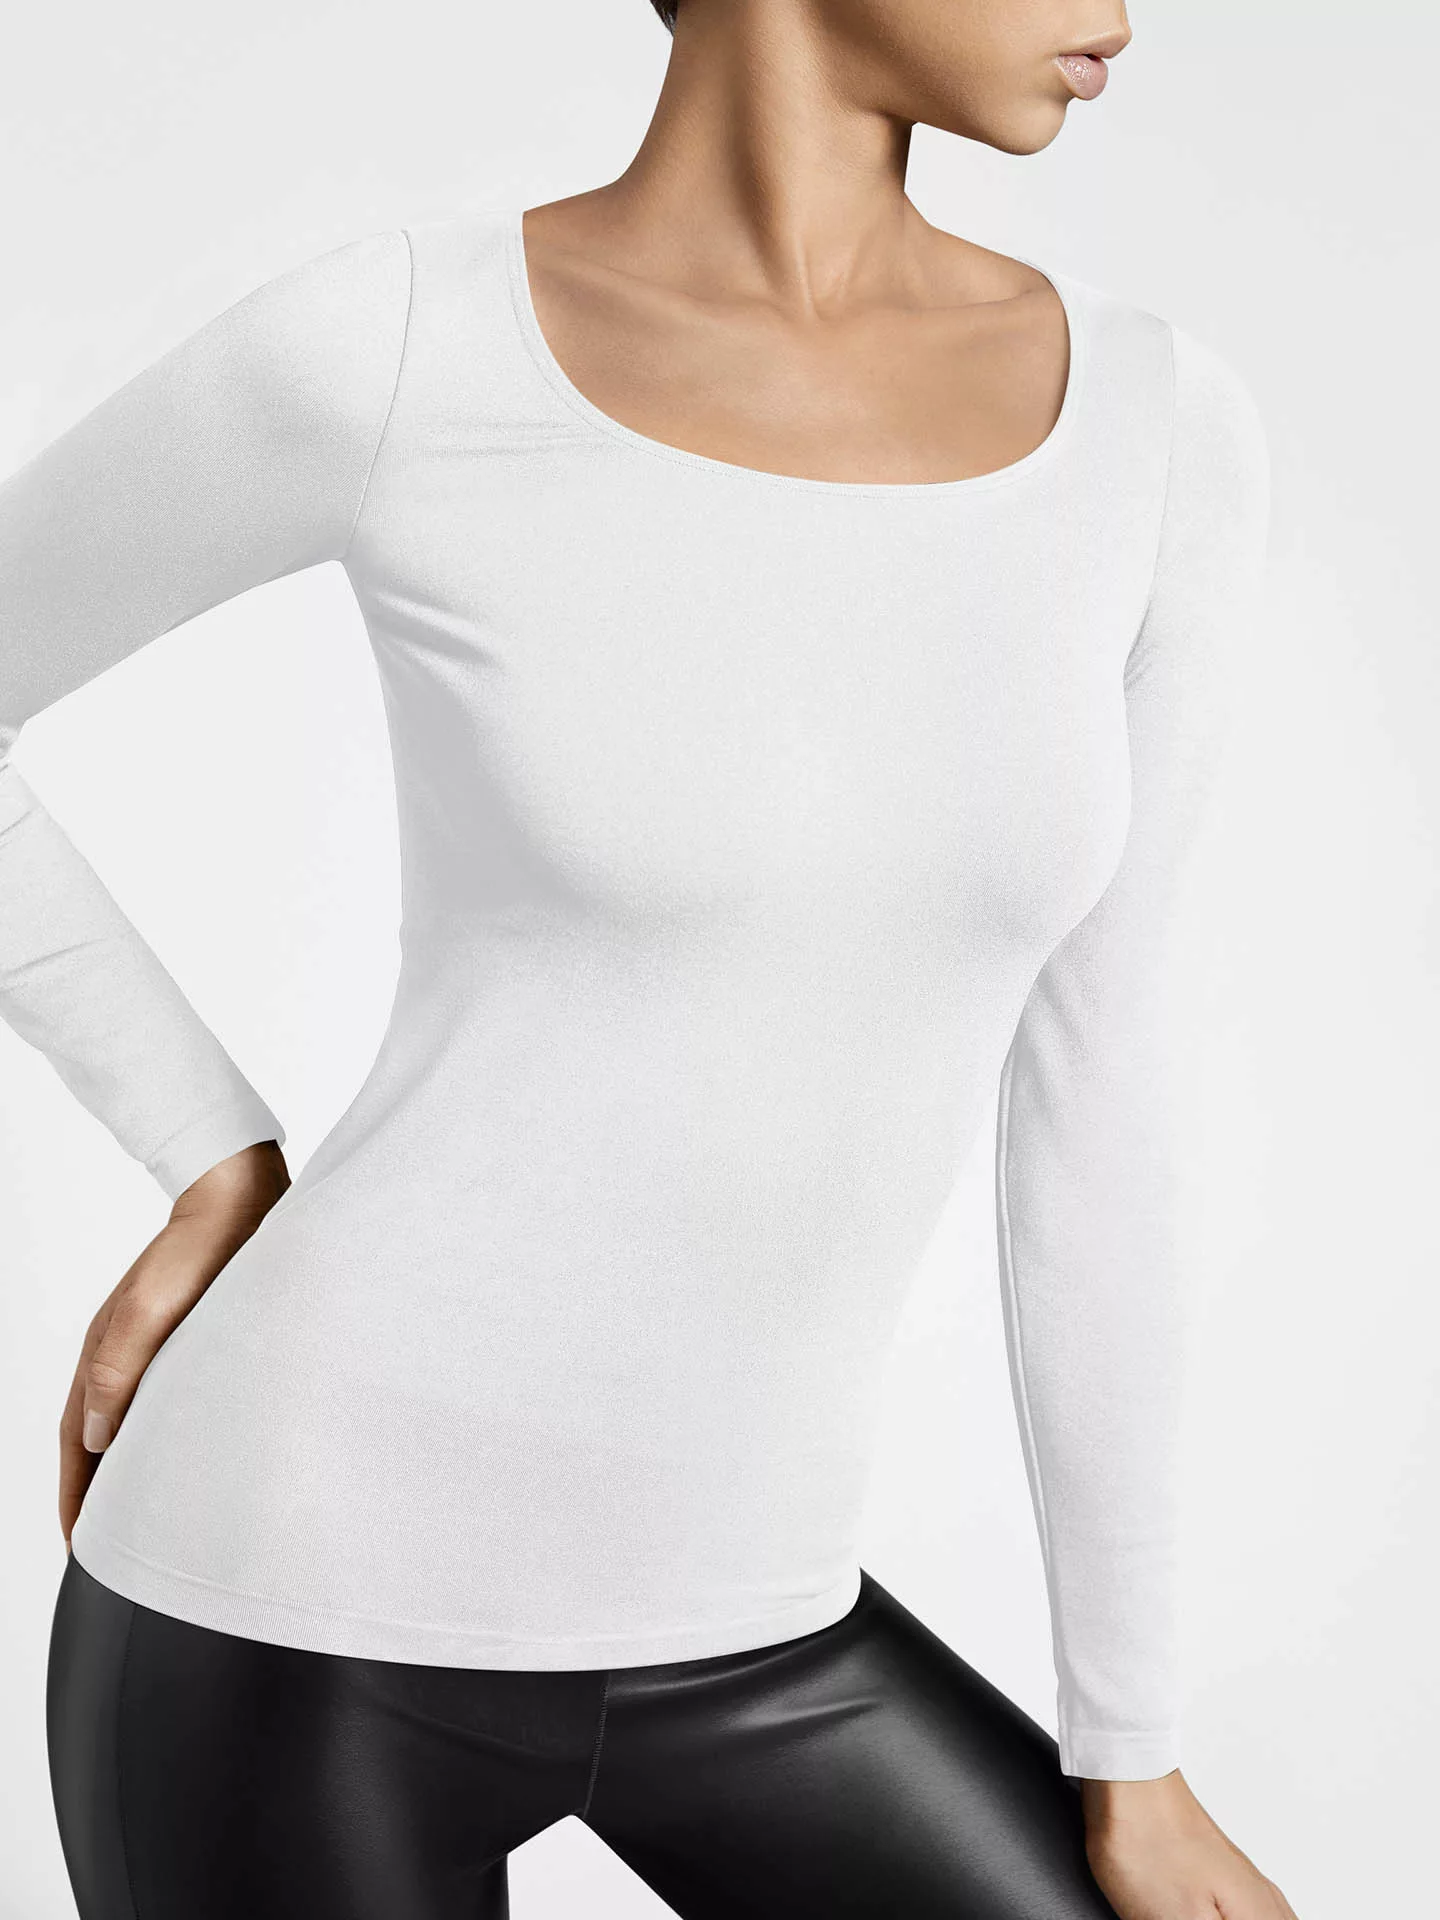 Wolford - Top Long Sleeves, Frau, white, Größe: S günstig online kaufen